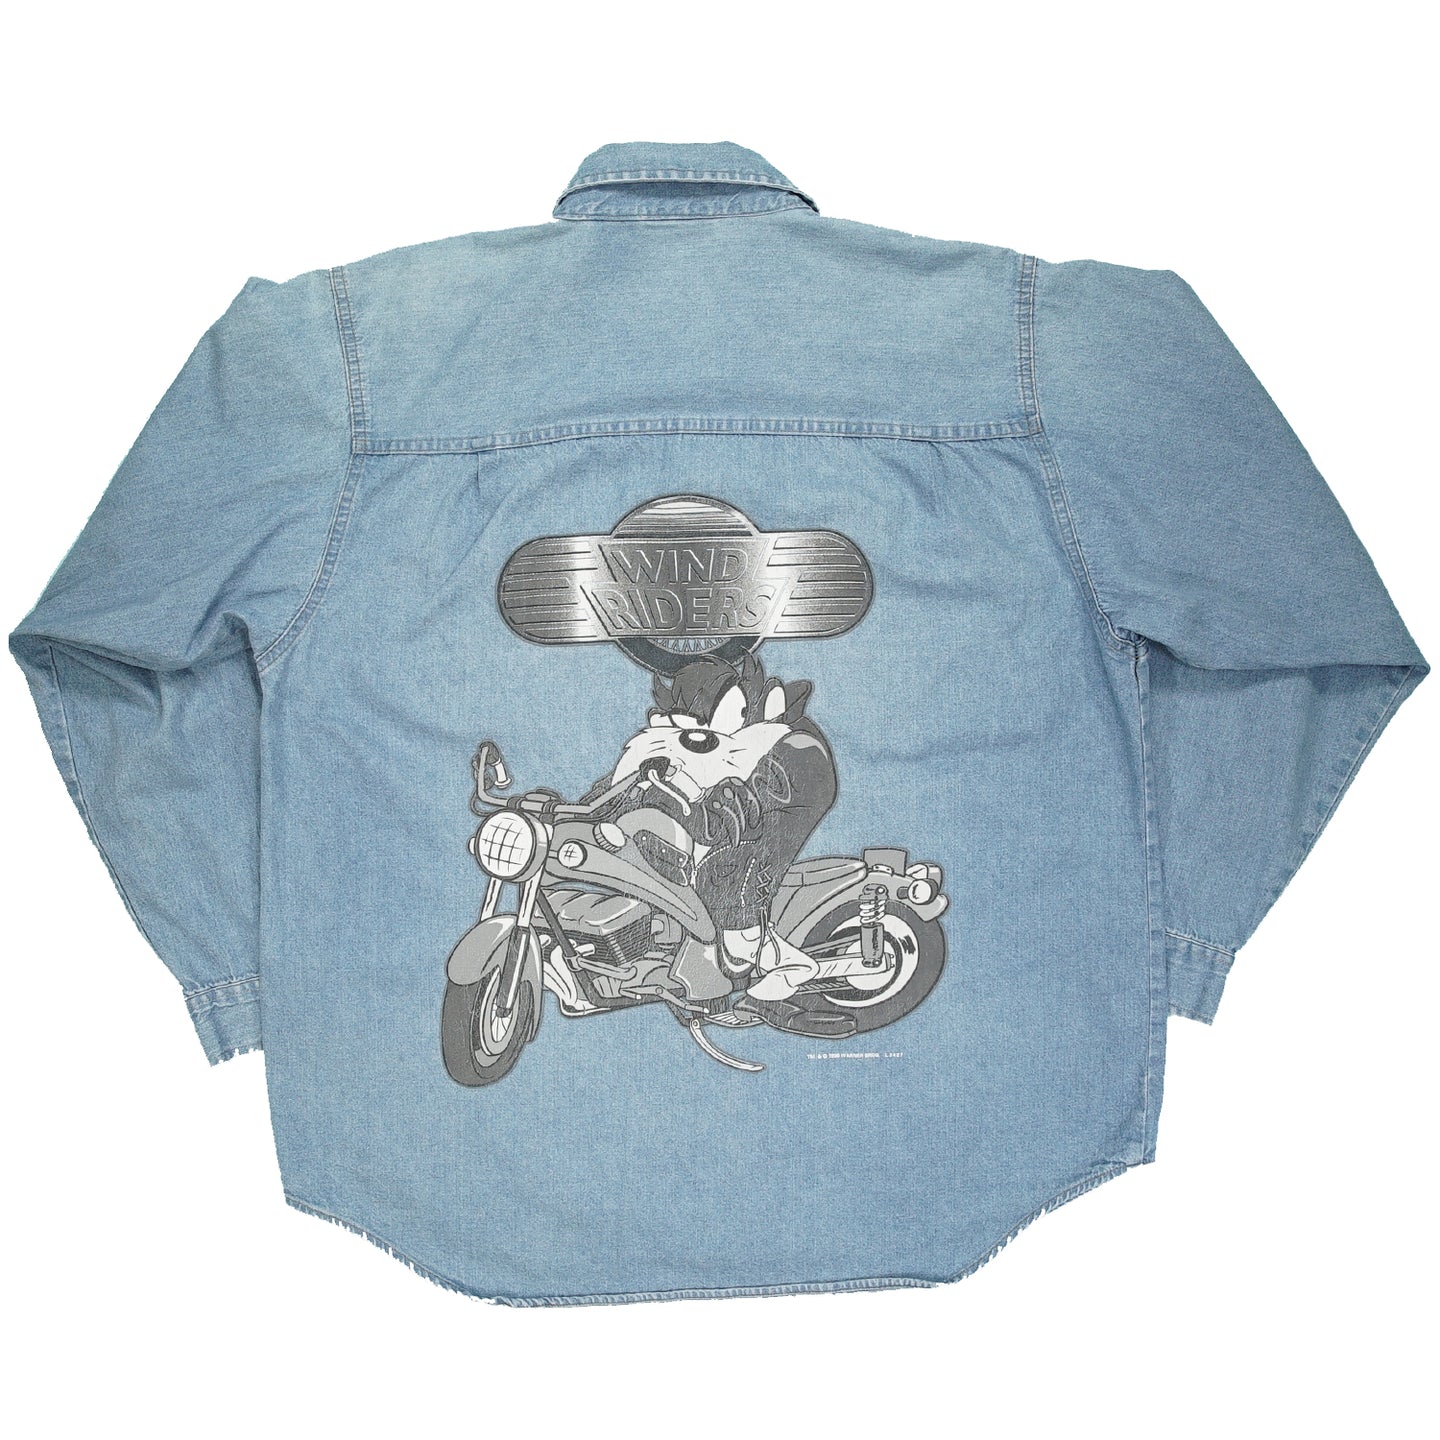 Vintage Taz Wind Riders Motorcycle denim shirt L